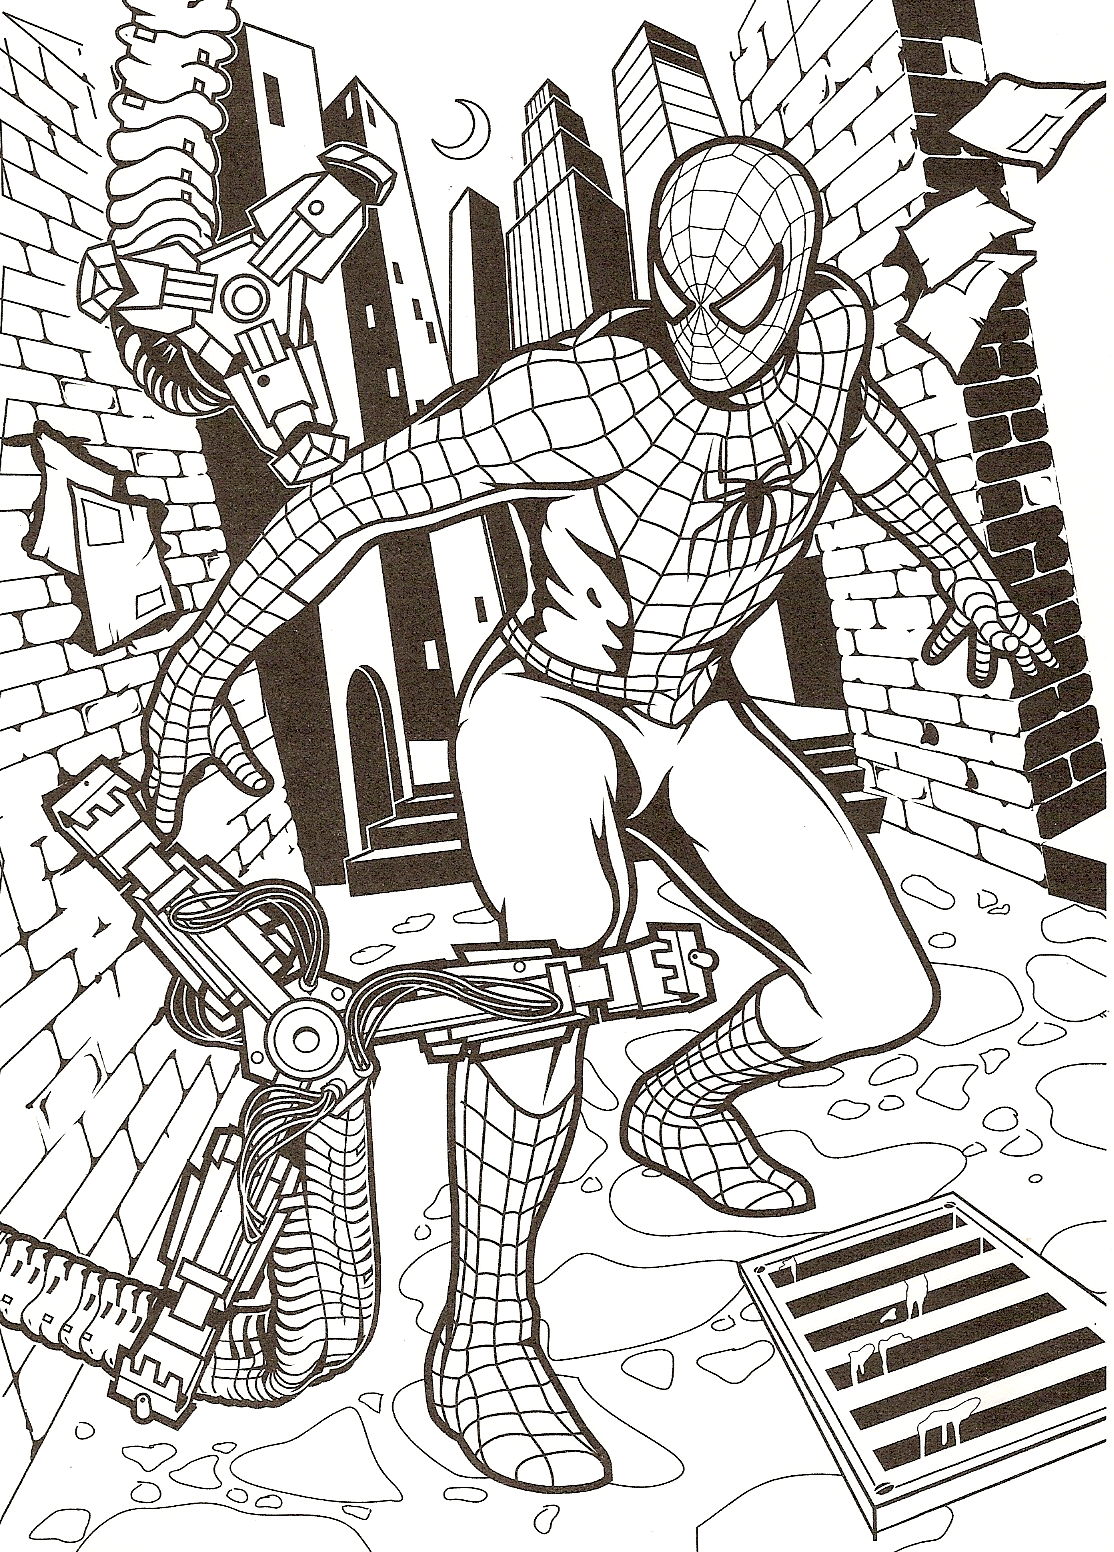 black spiderman coloring page